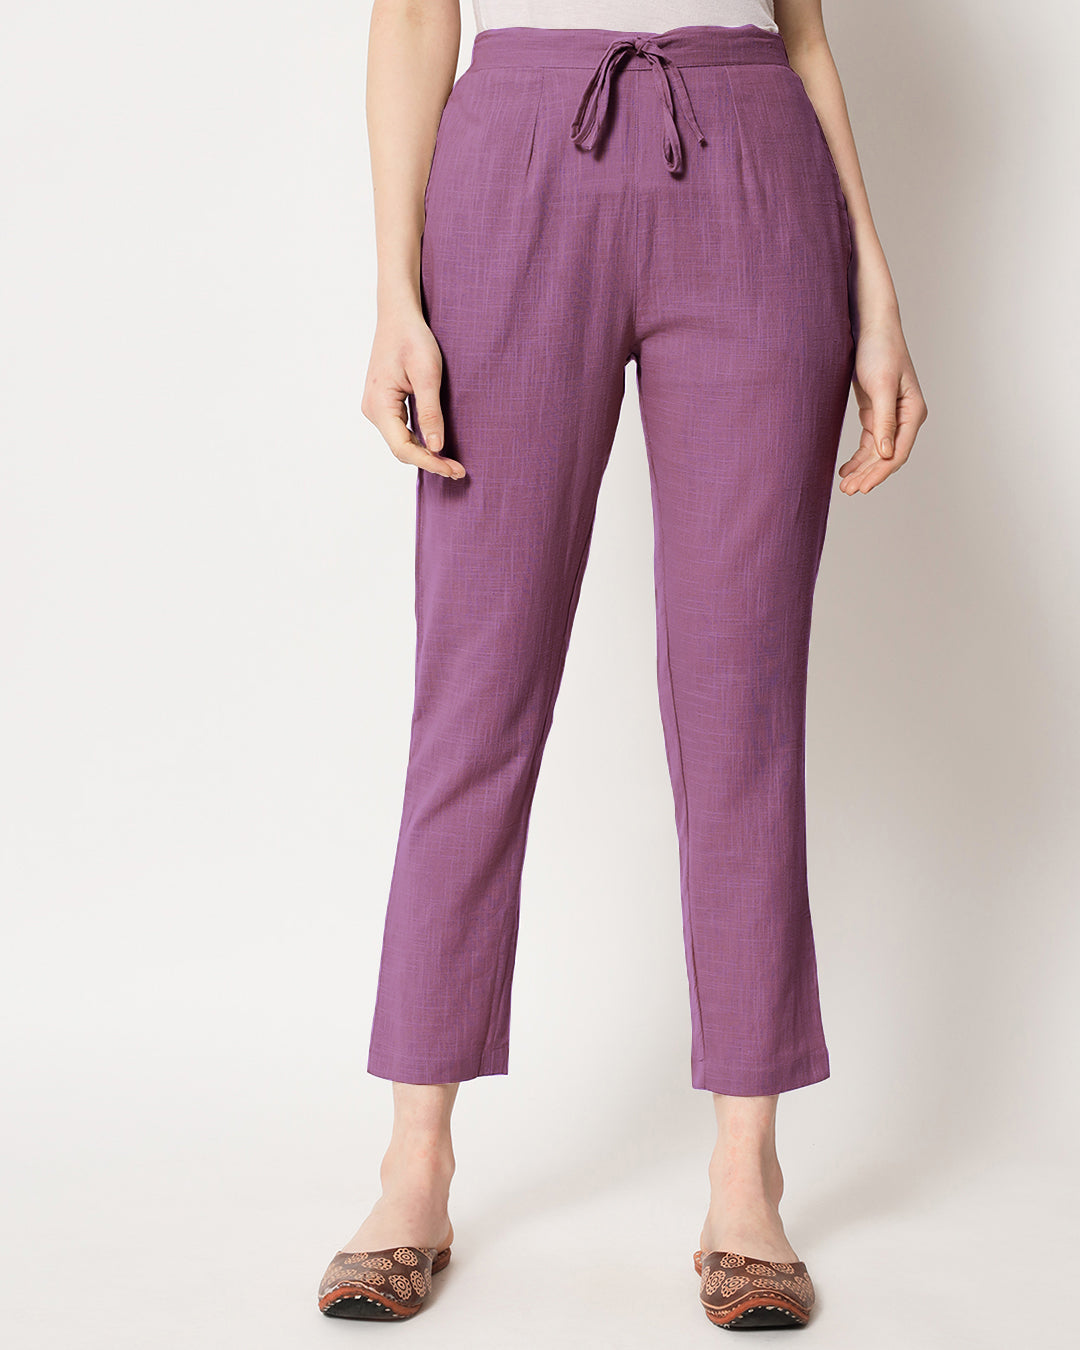 Combo: Classic Red & Wisteria Purple Cigarette Pants- Set of 2